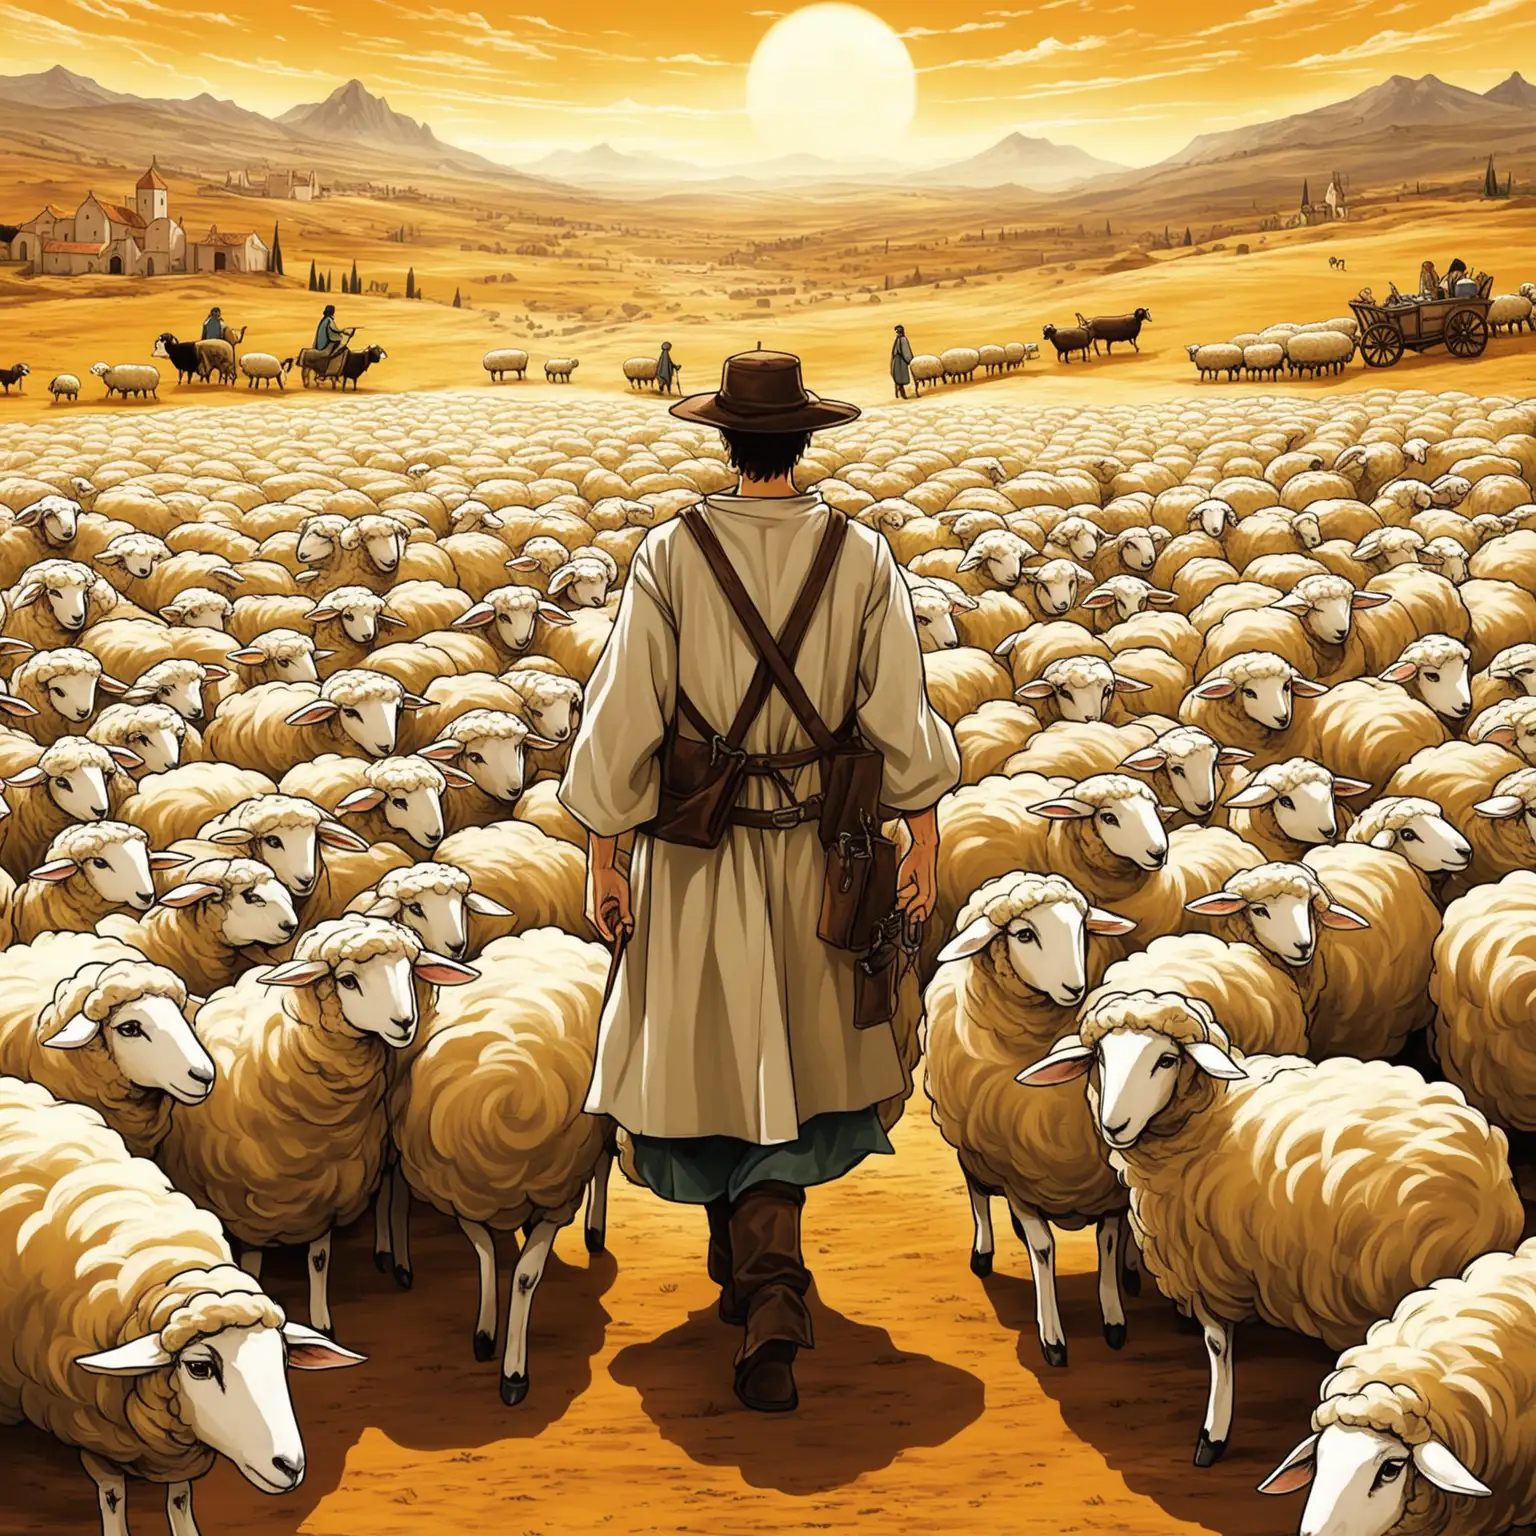 Santiago-Herding-Sheep-in-The-Alchemist-Novel-Scene